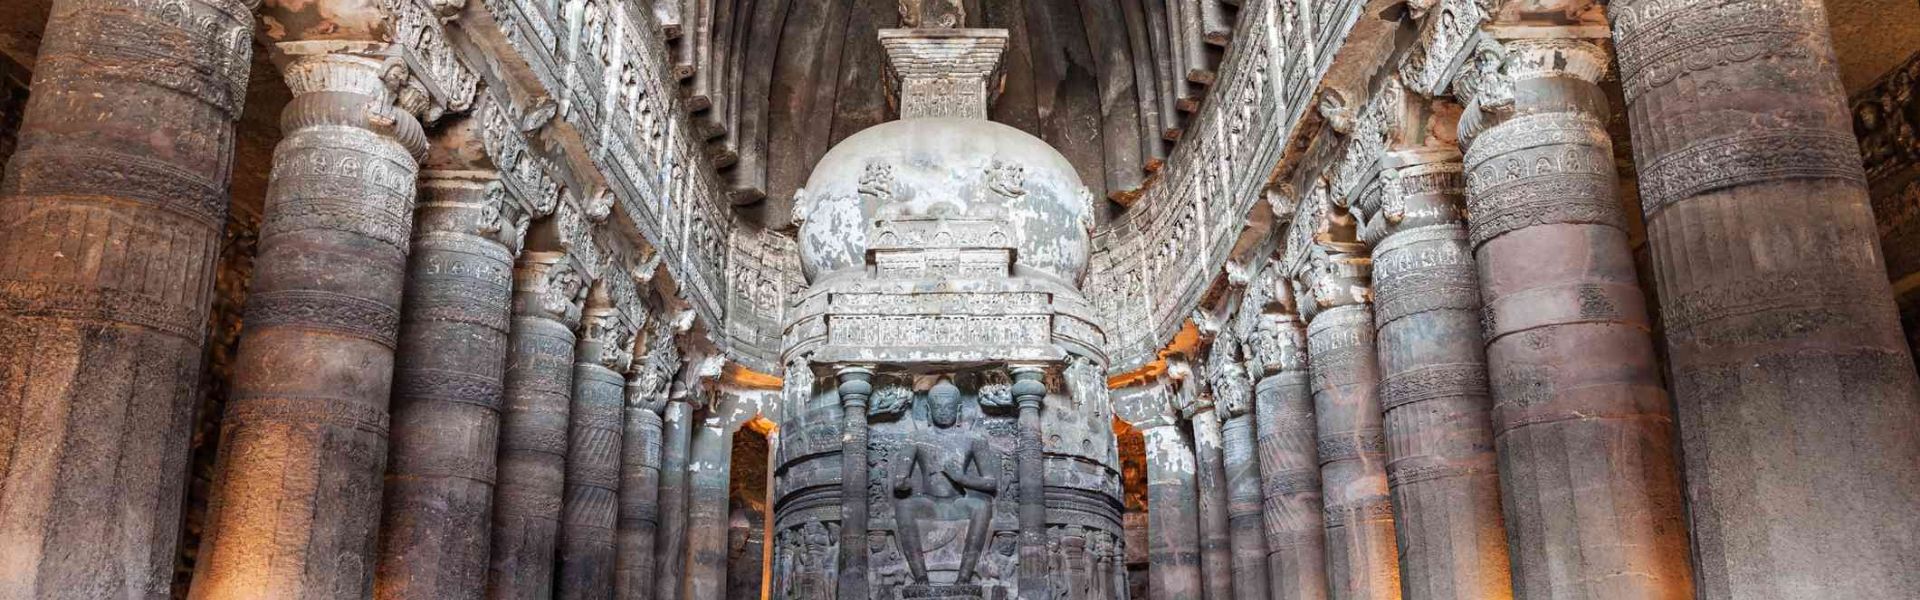 ajanta ellora caves,india tour,incredible india,tailor made holidays,vacation,monuments in india